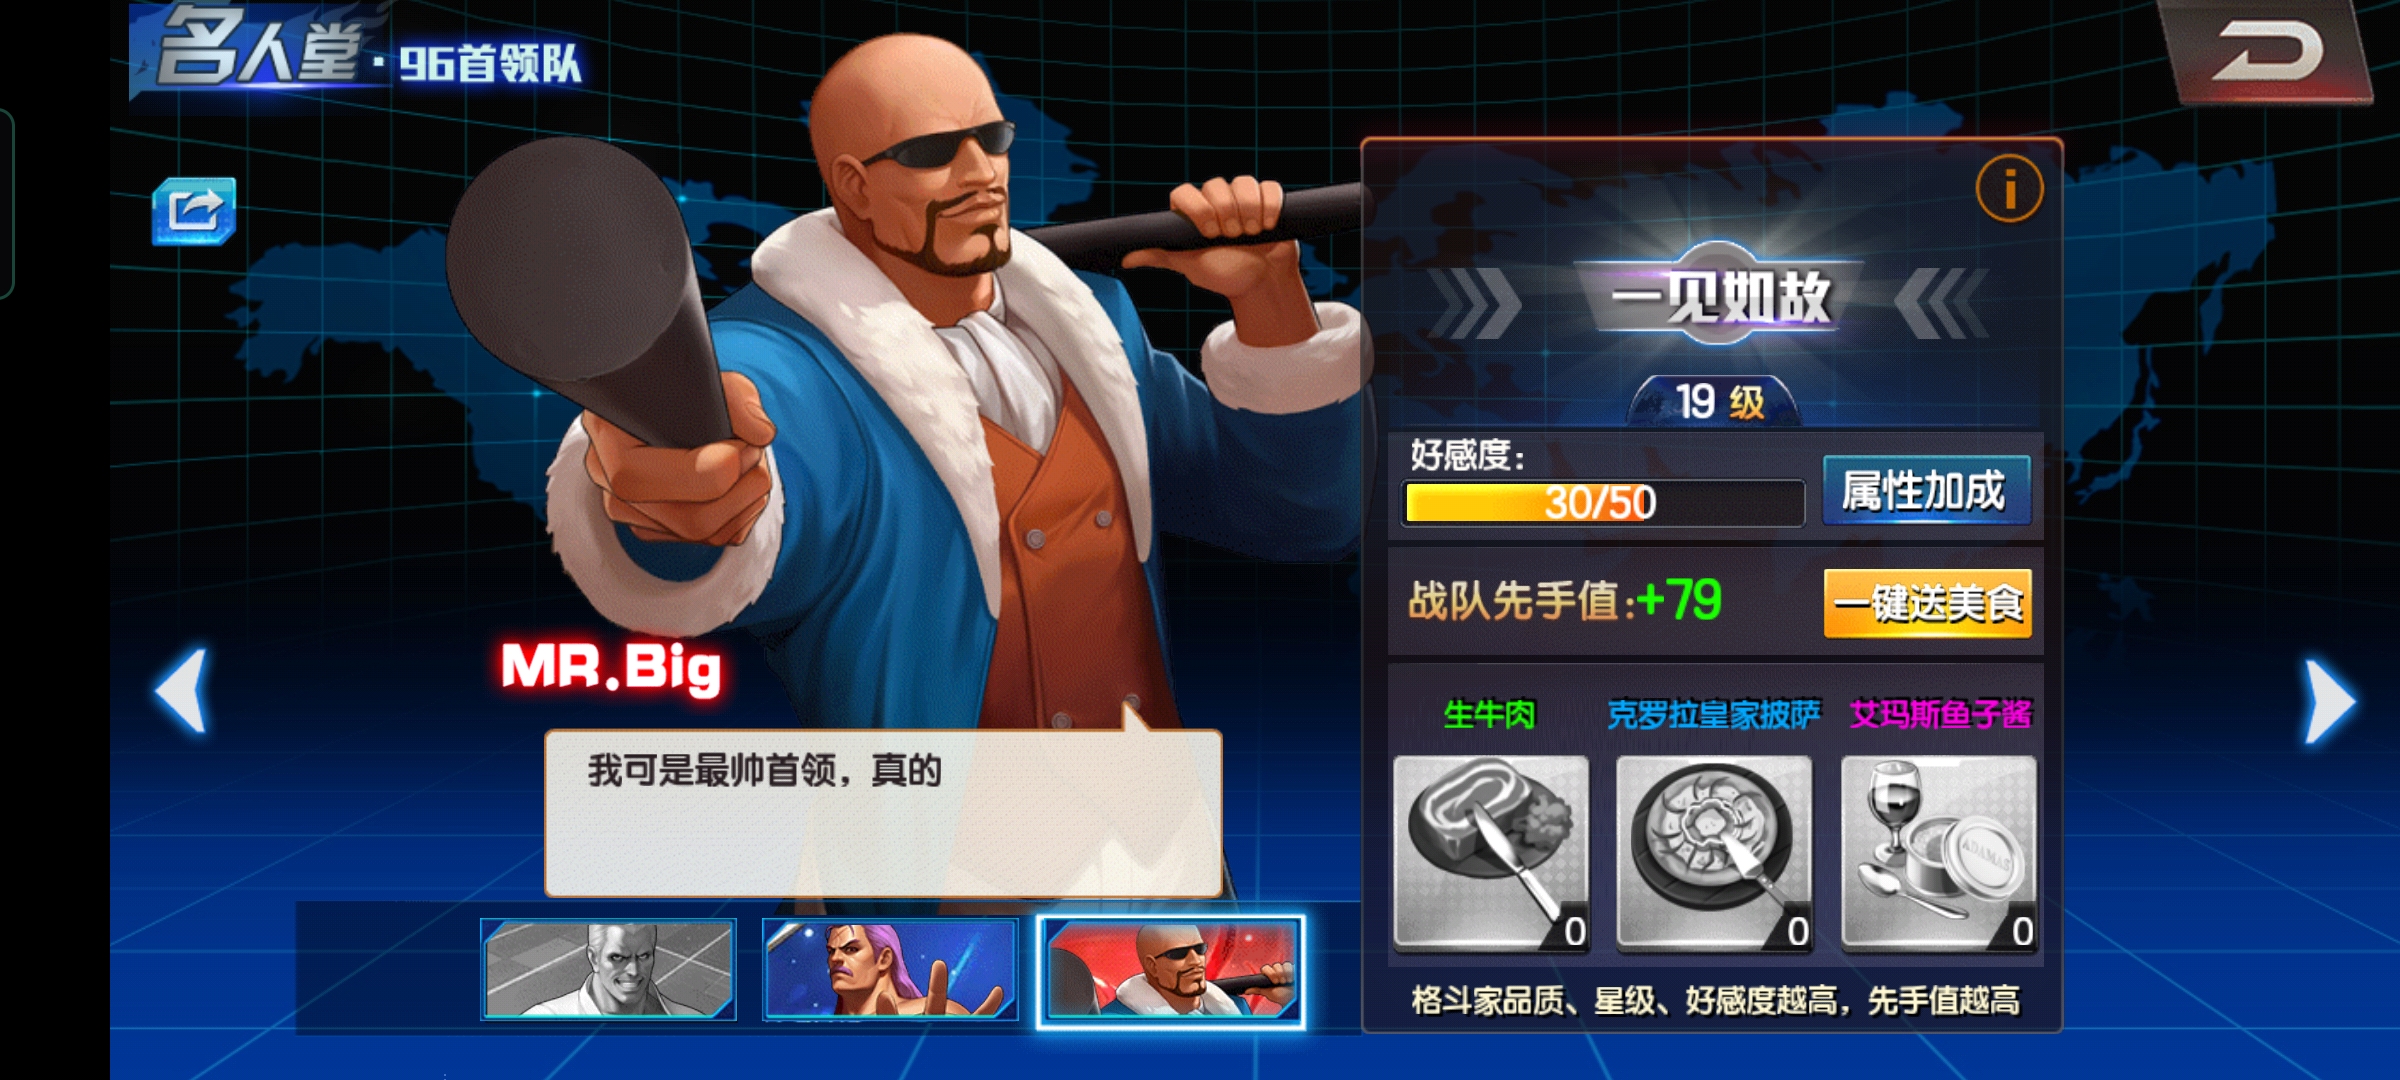 Mr.Big(遊戲《拳皇98終極之戰OL》中的格鬥家)